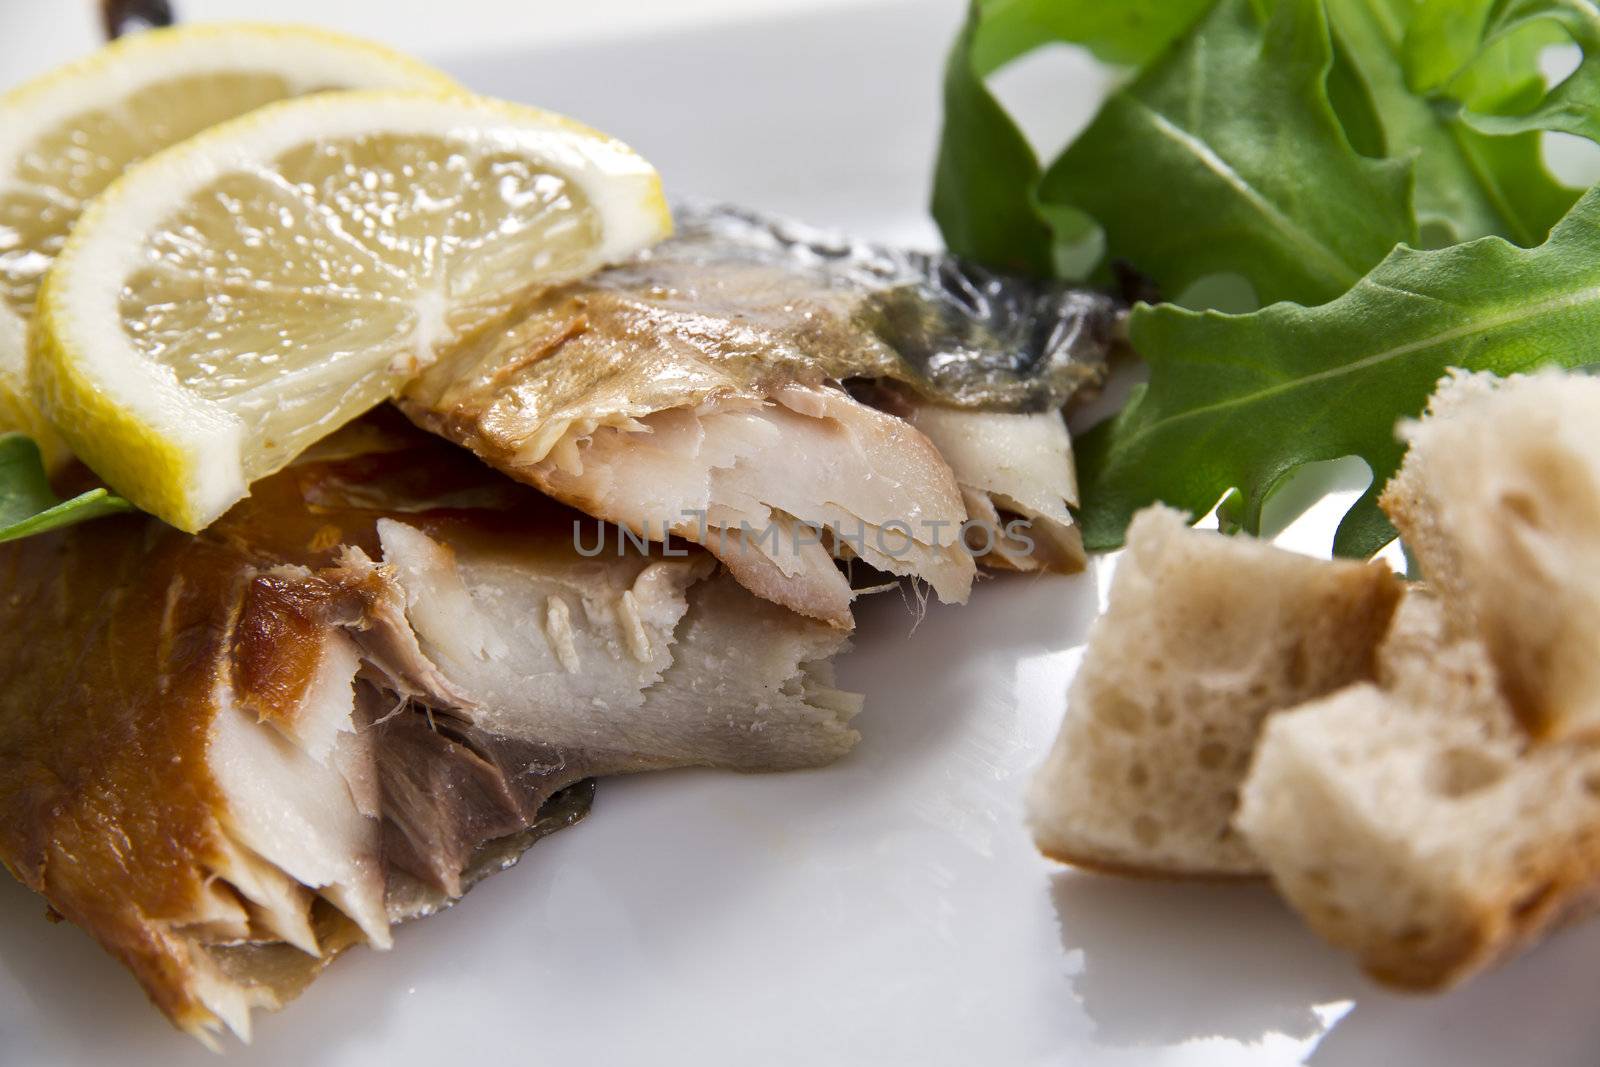 Smoked fish with lemon and salad by caldix